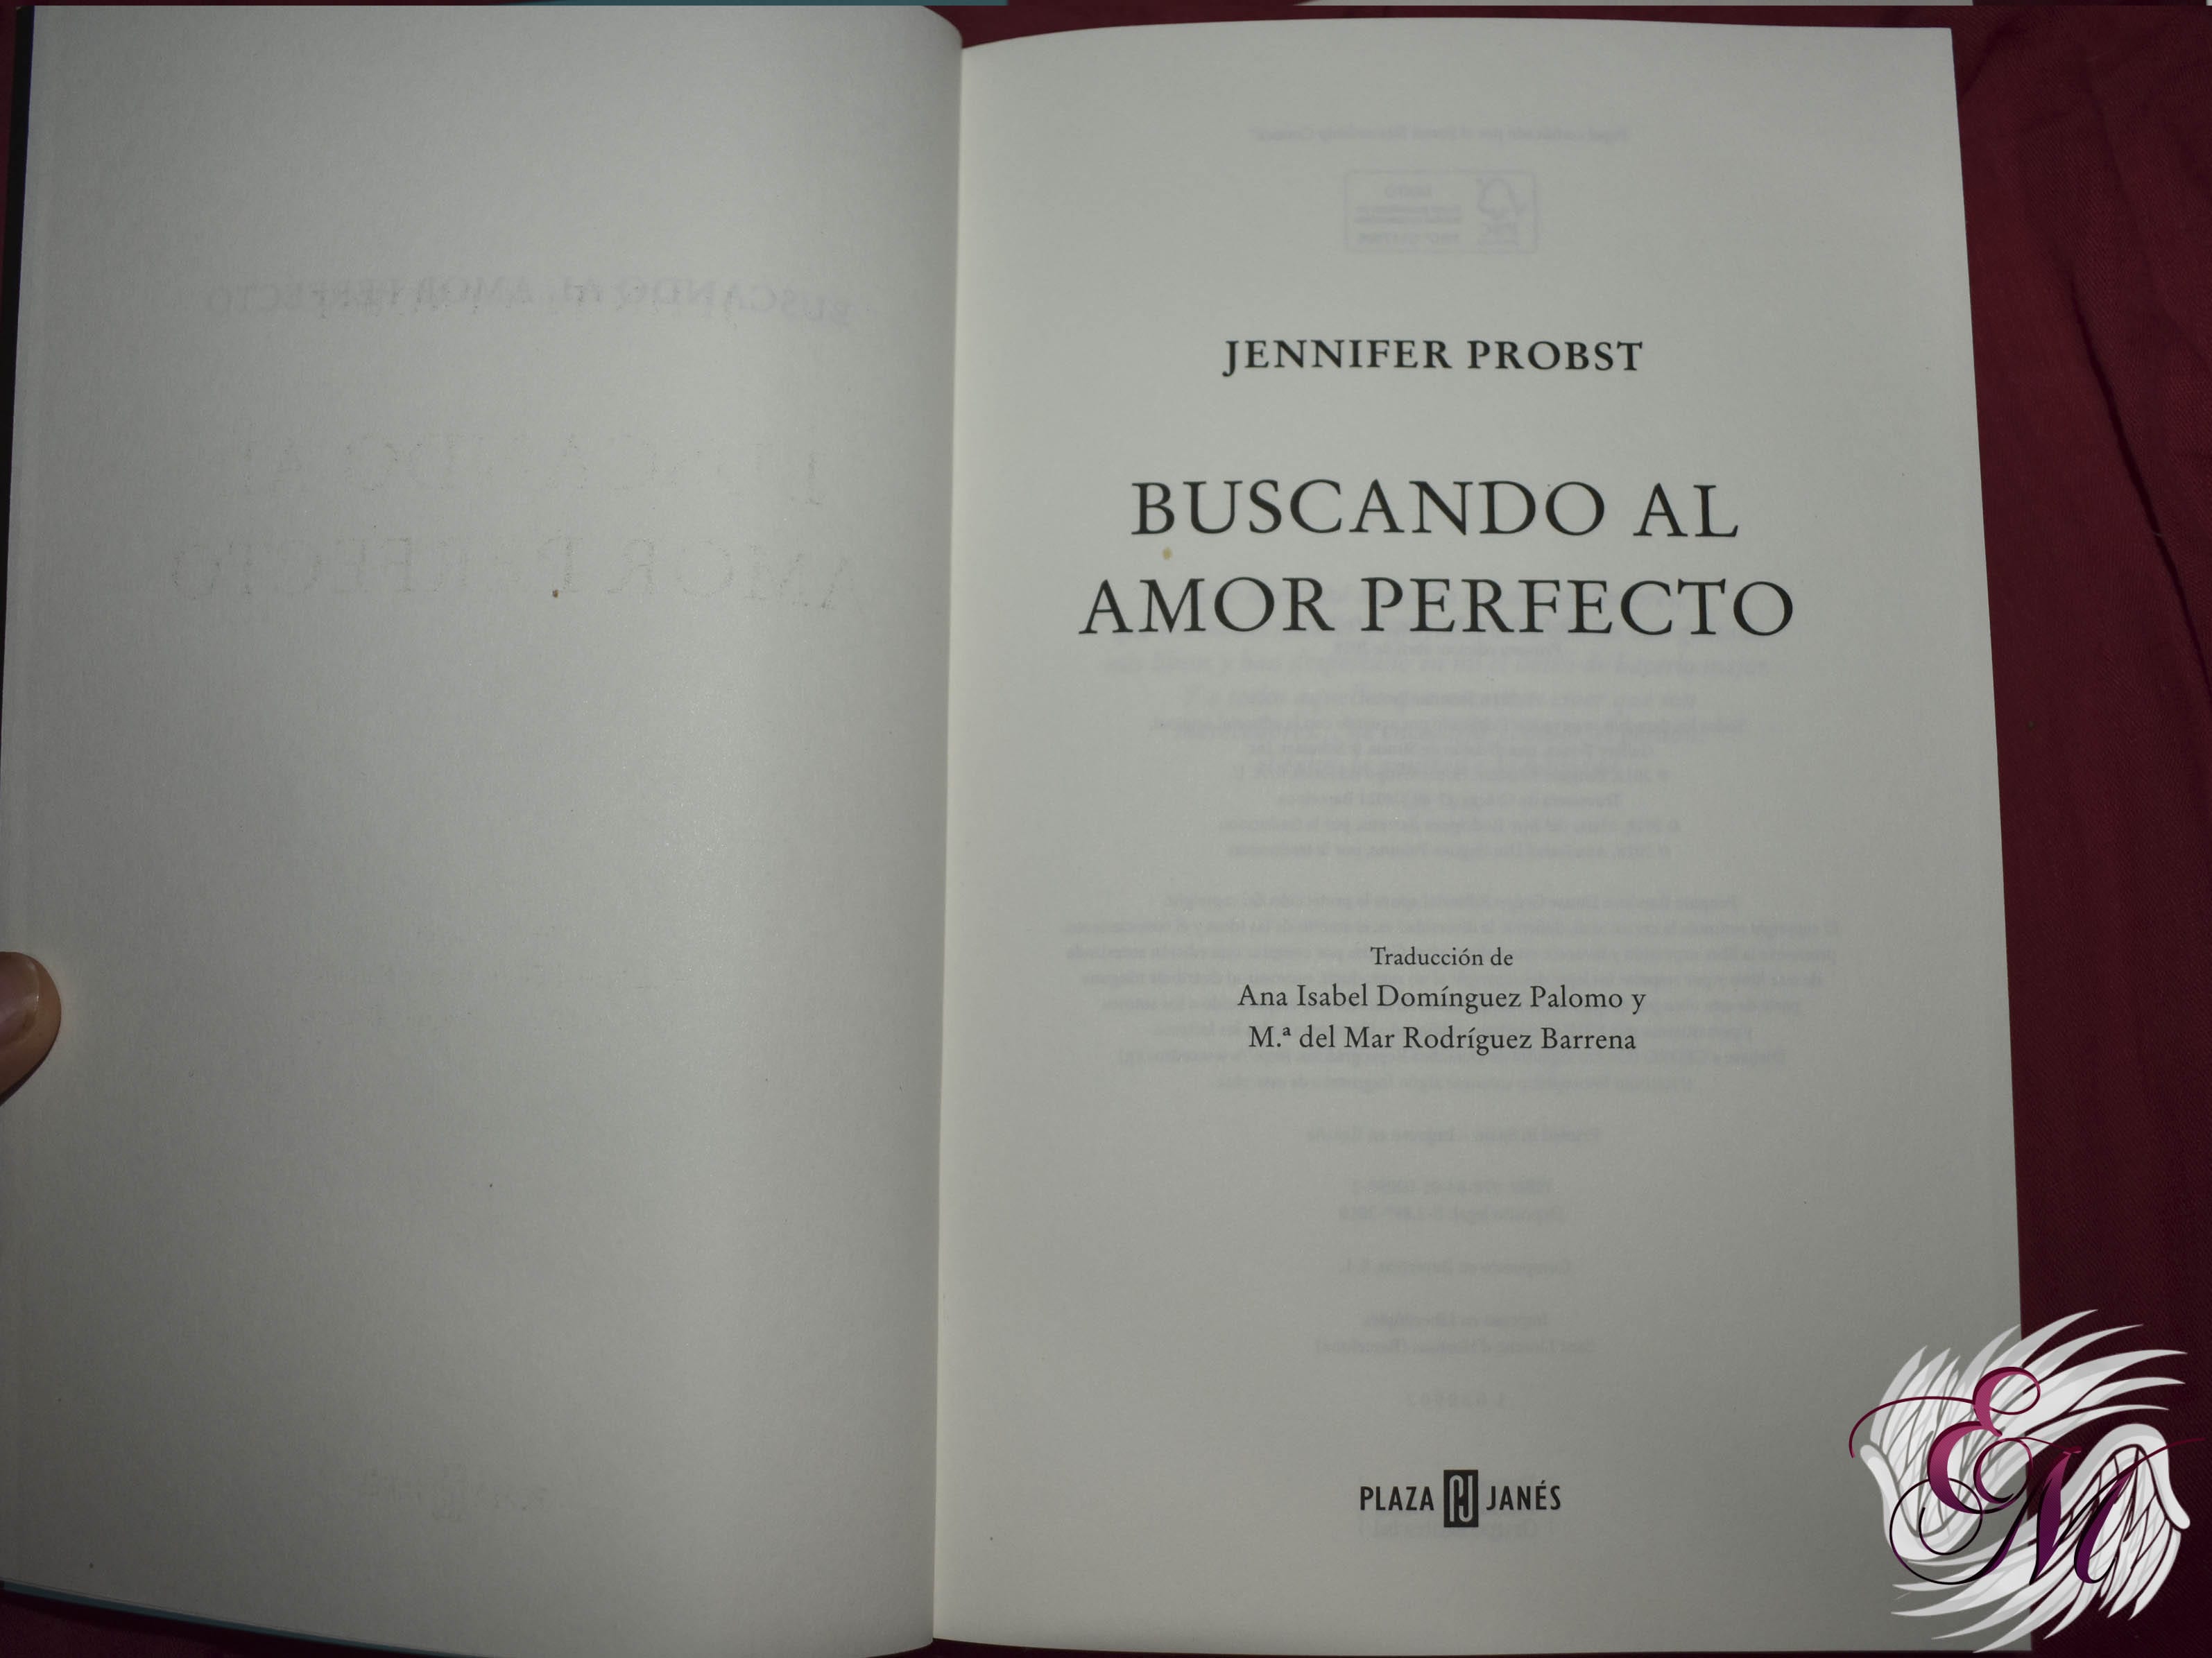 Buscando al amor perfecto, de Jennifer Probst - Reseña